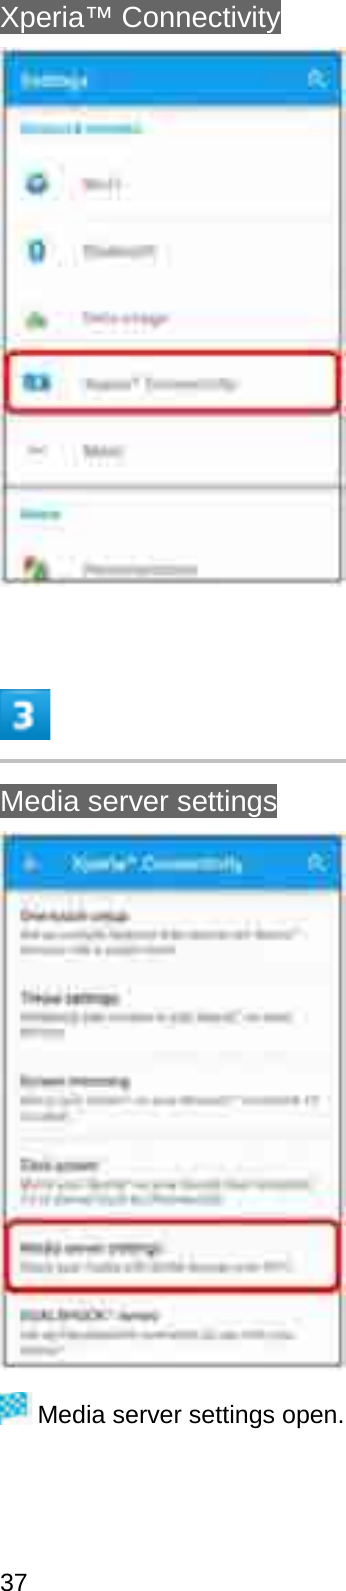 Xperia™ ConnectivityMedia server settingsMedia server settings open.37